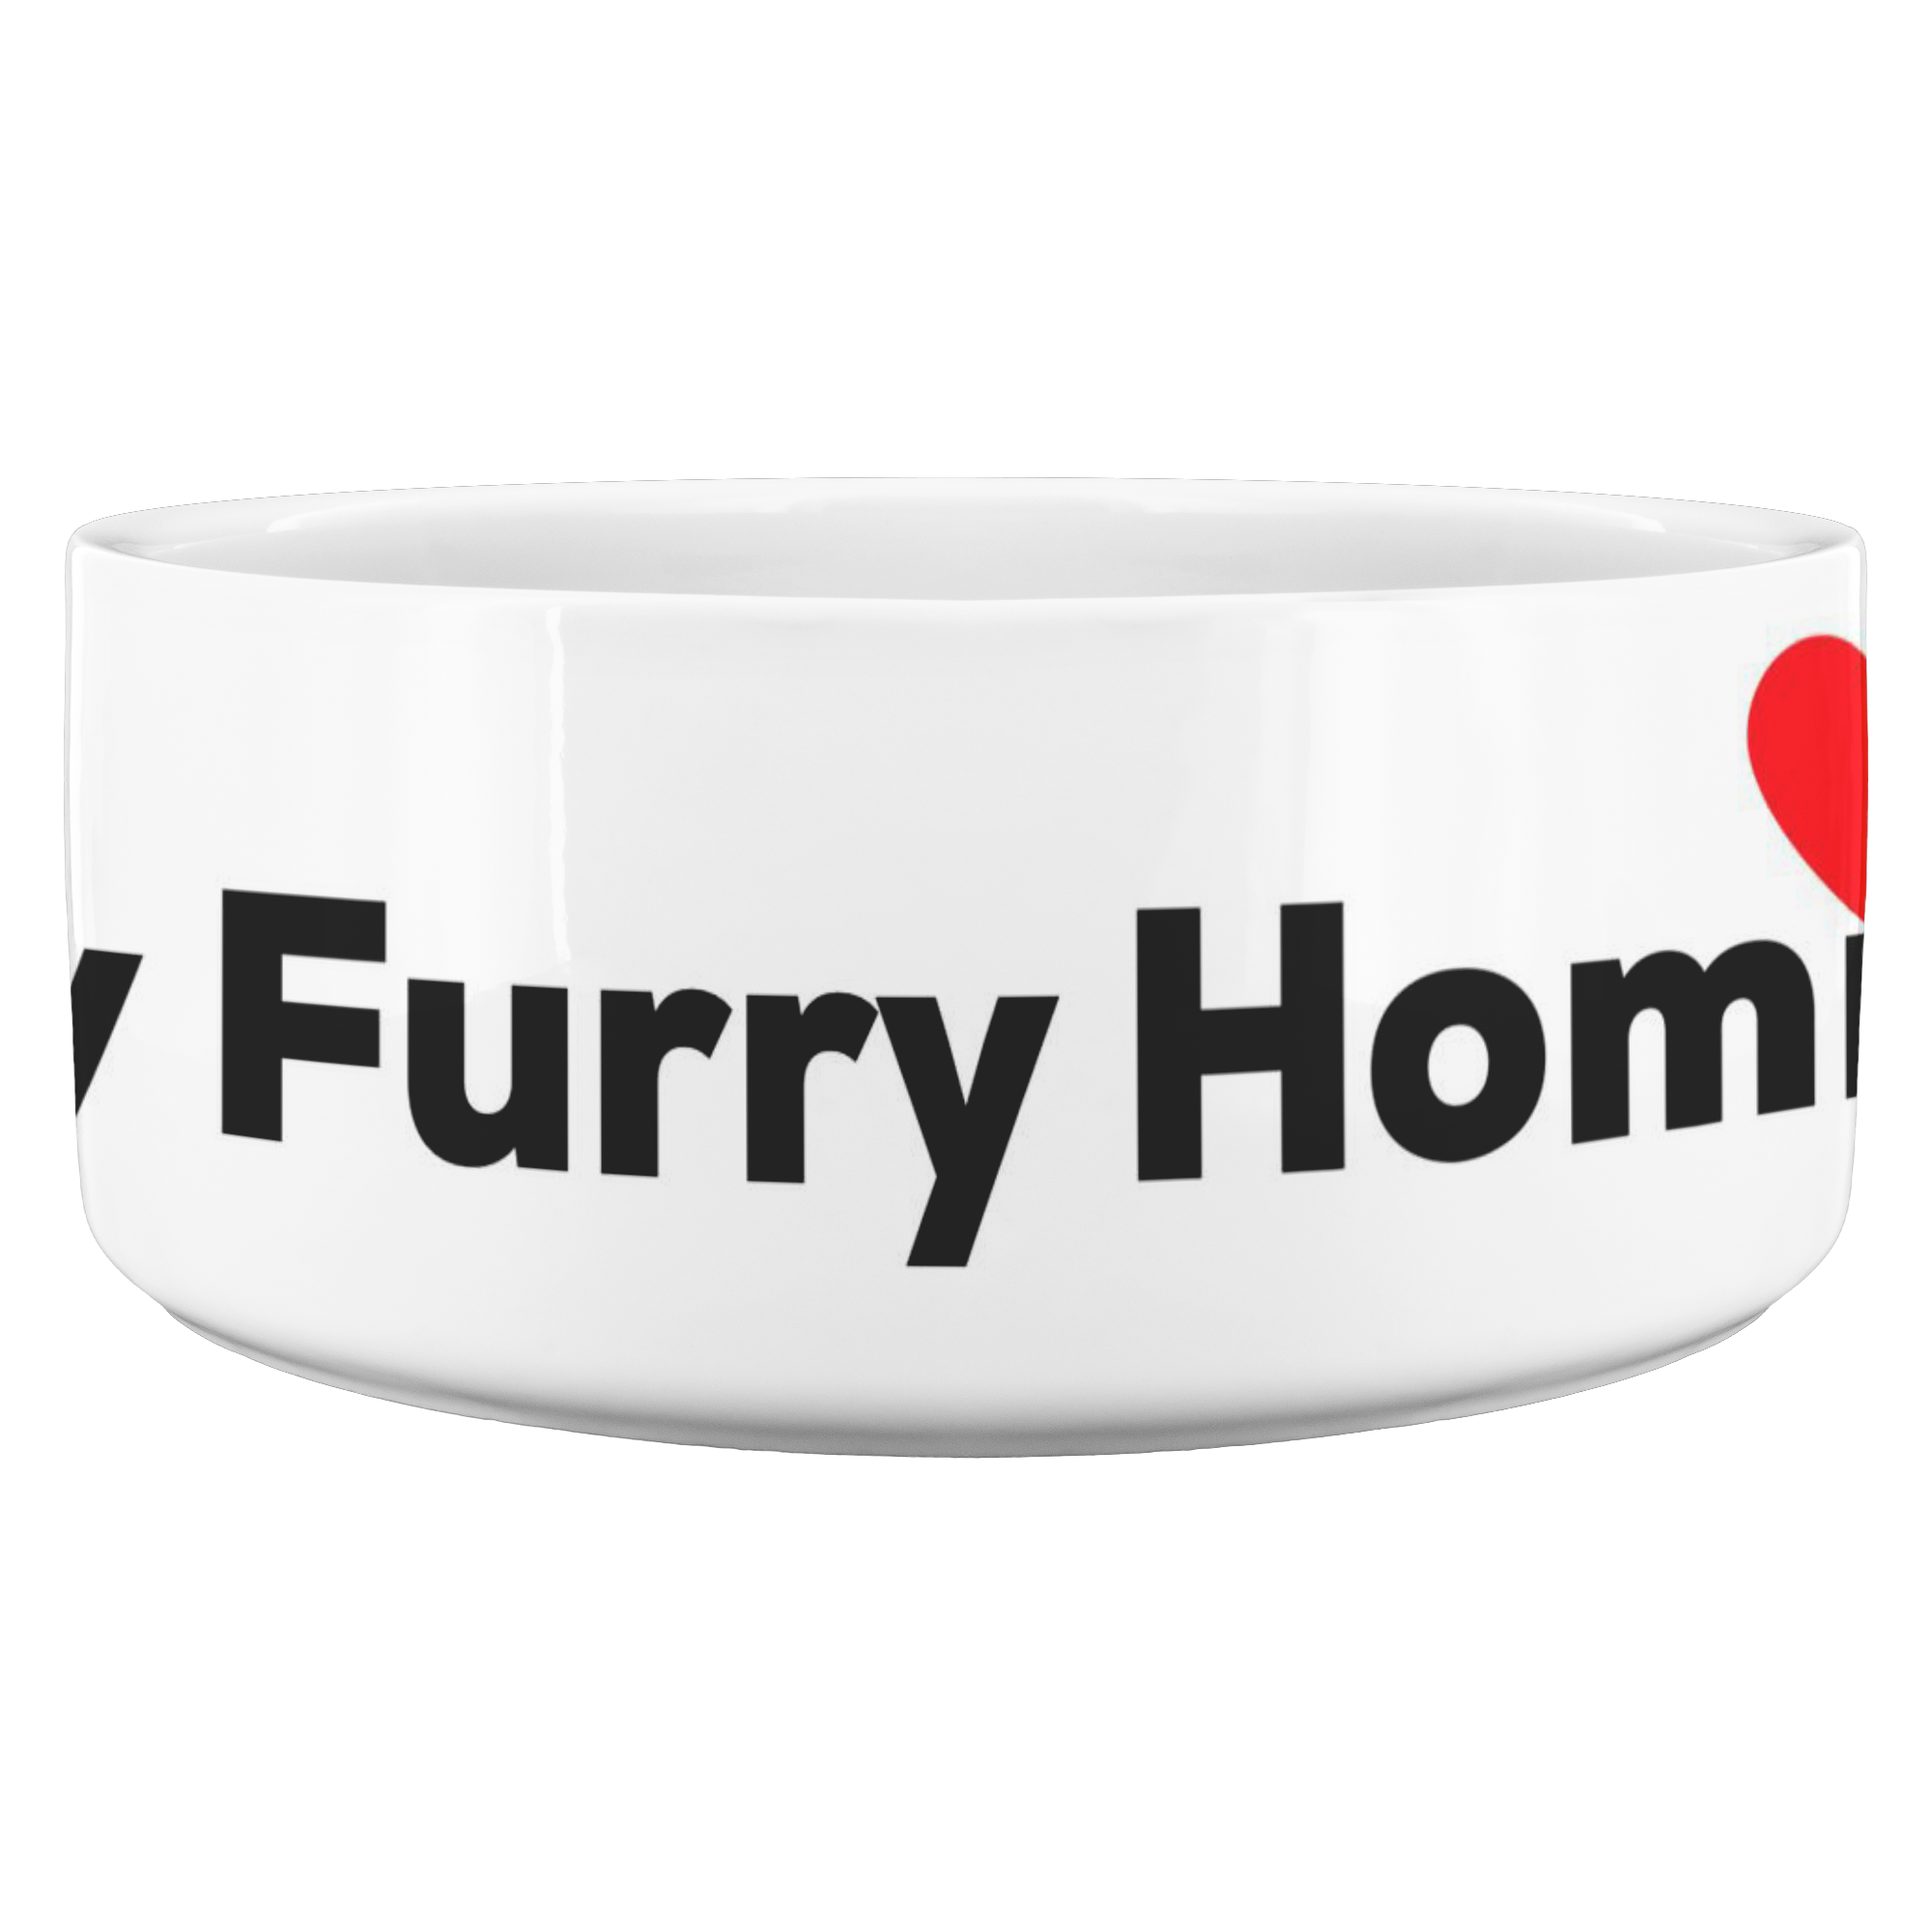 "My Furry Homie" Pet Bowl